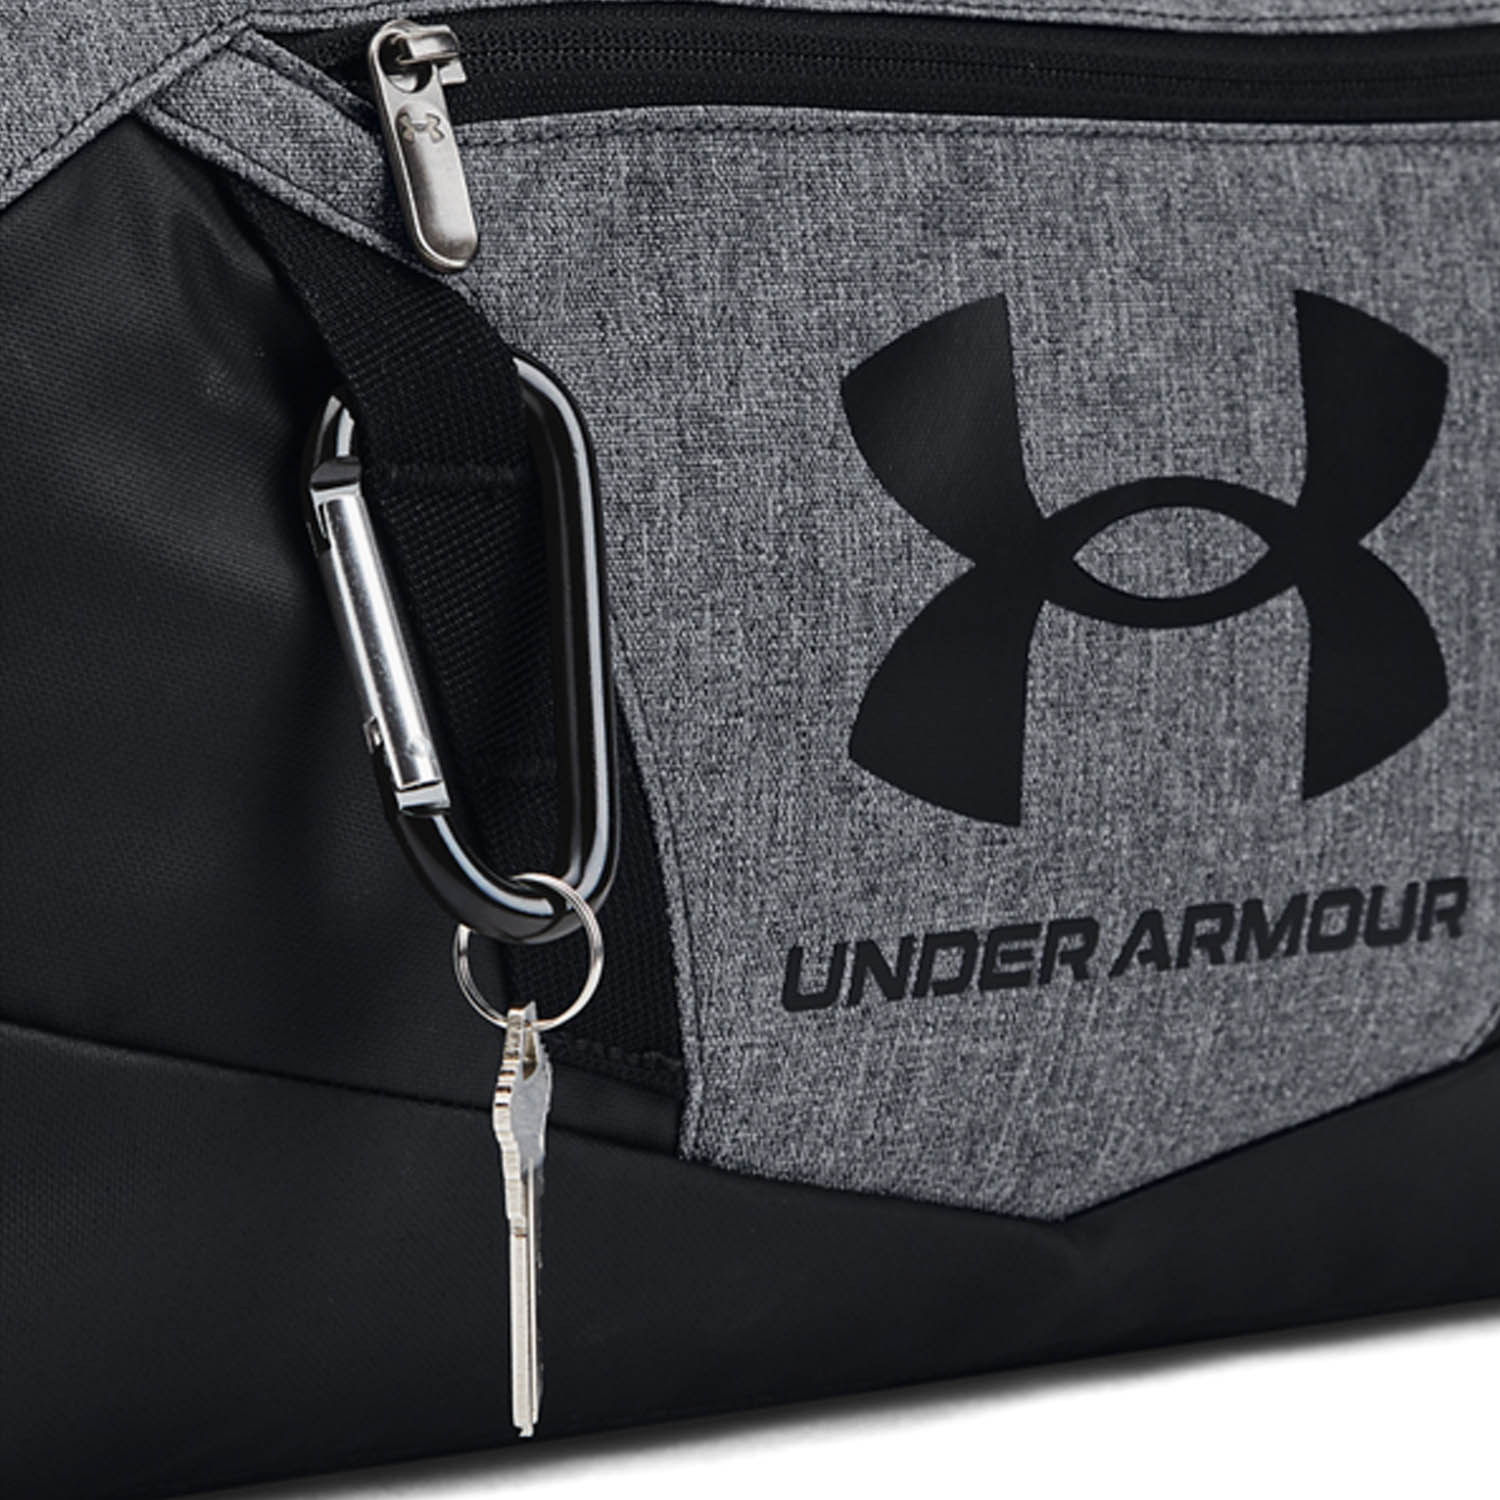 Under Armour Undeniable 5.0 Mini Duffle Bag - Pitch Gray/Medium Heather/Black